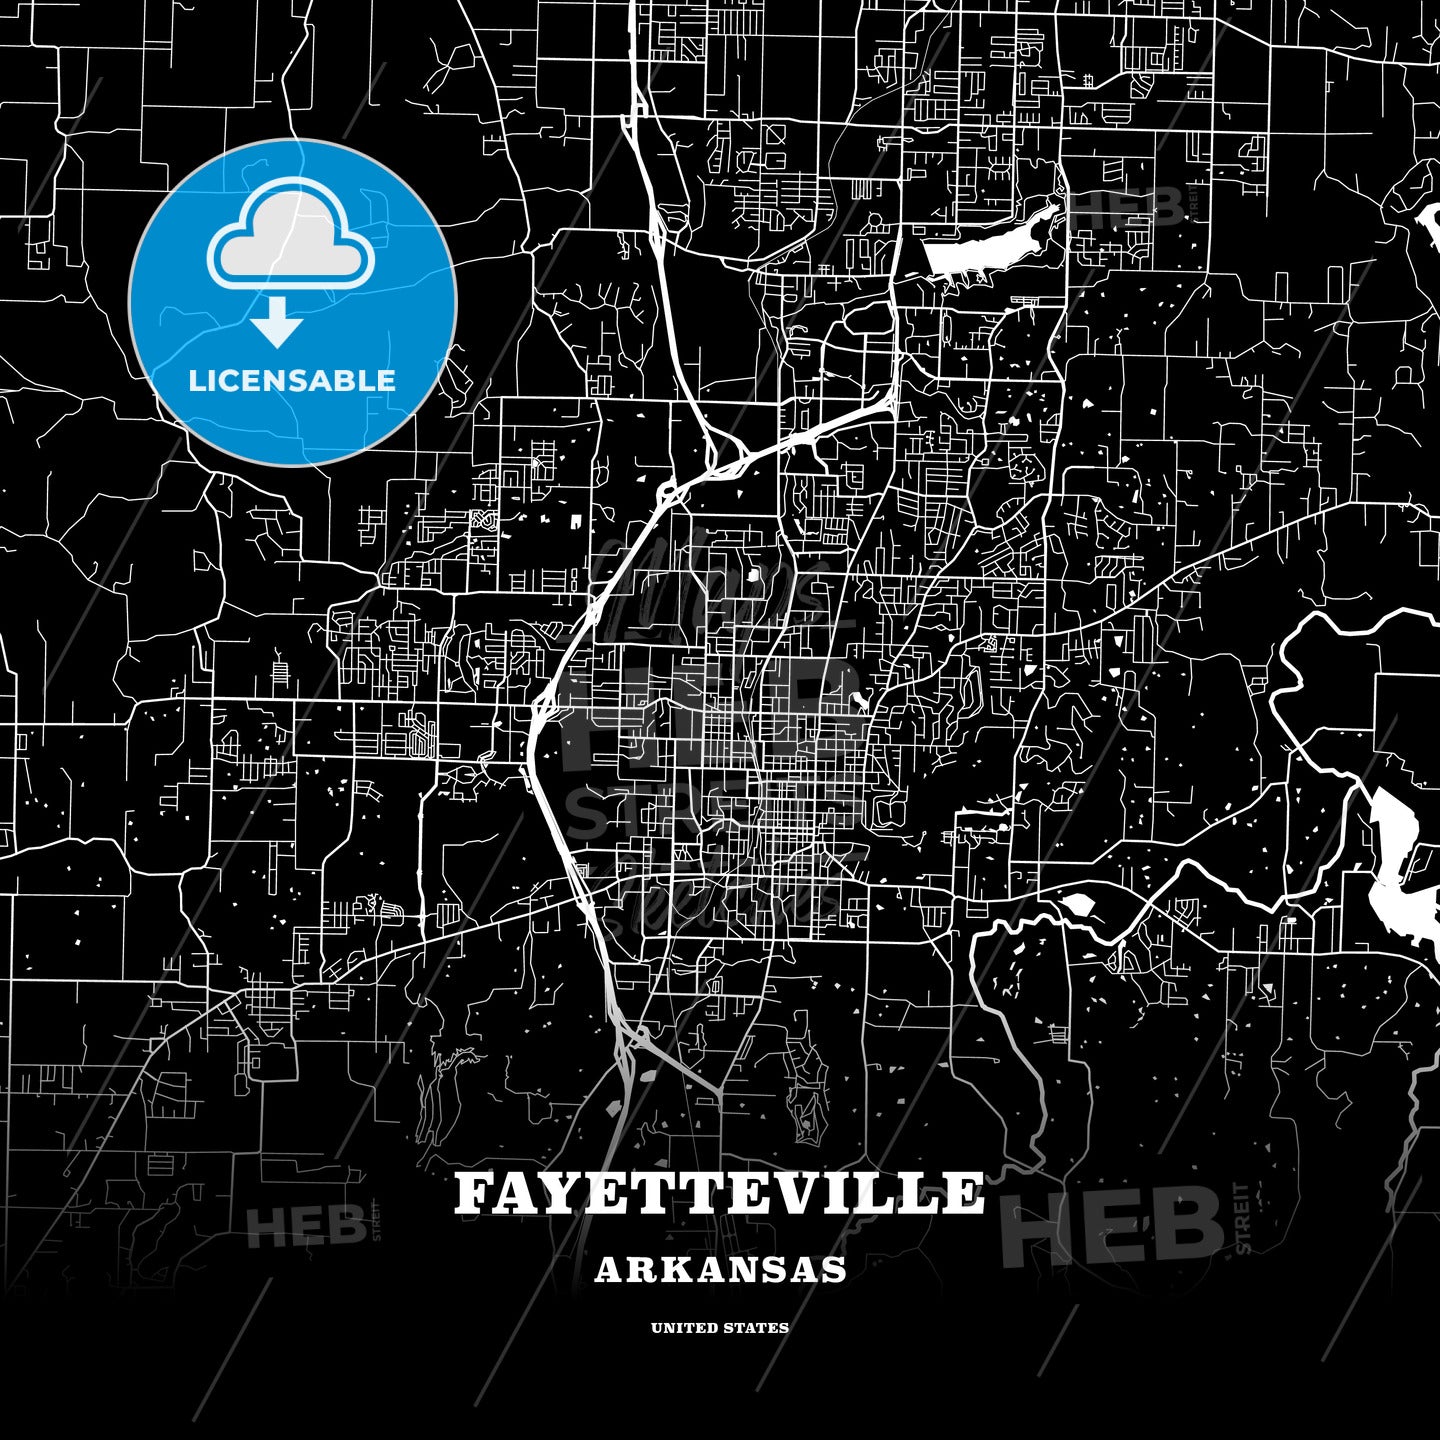 Fayetteville, Arkansas, USA map